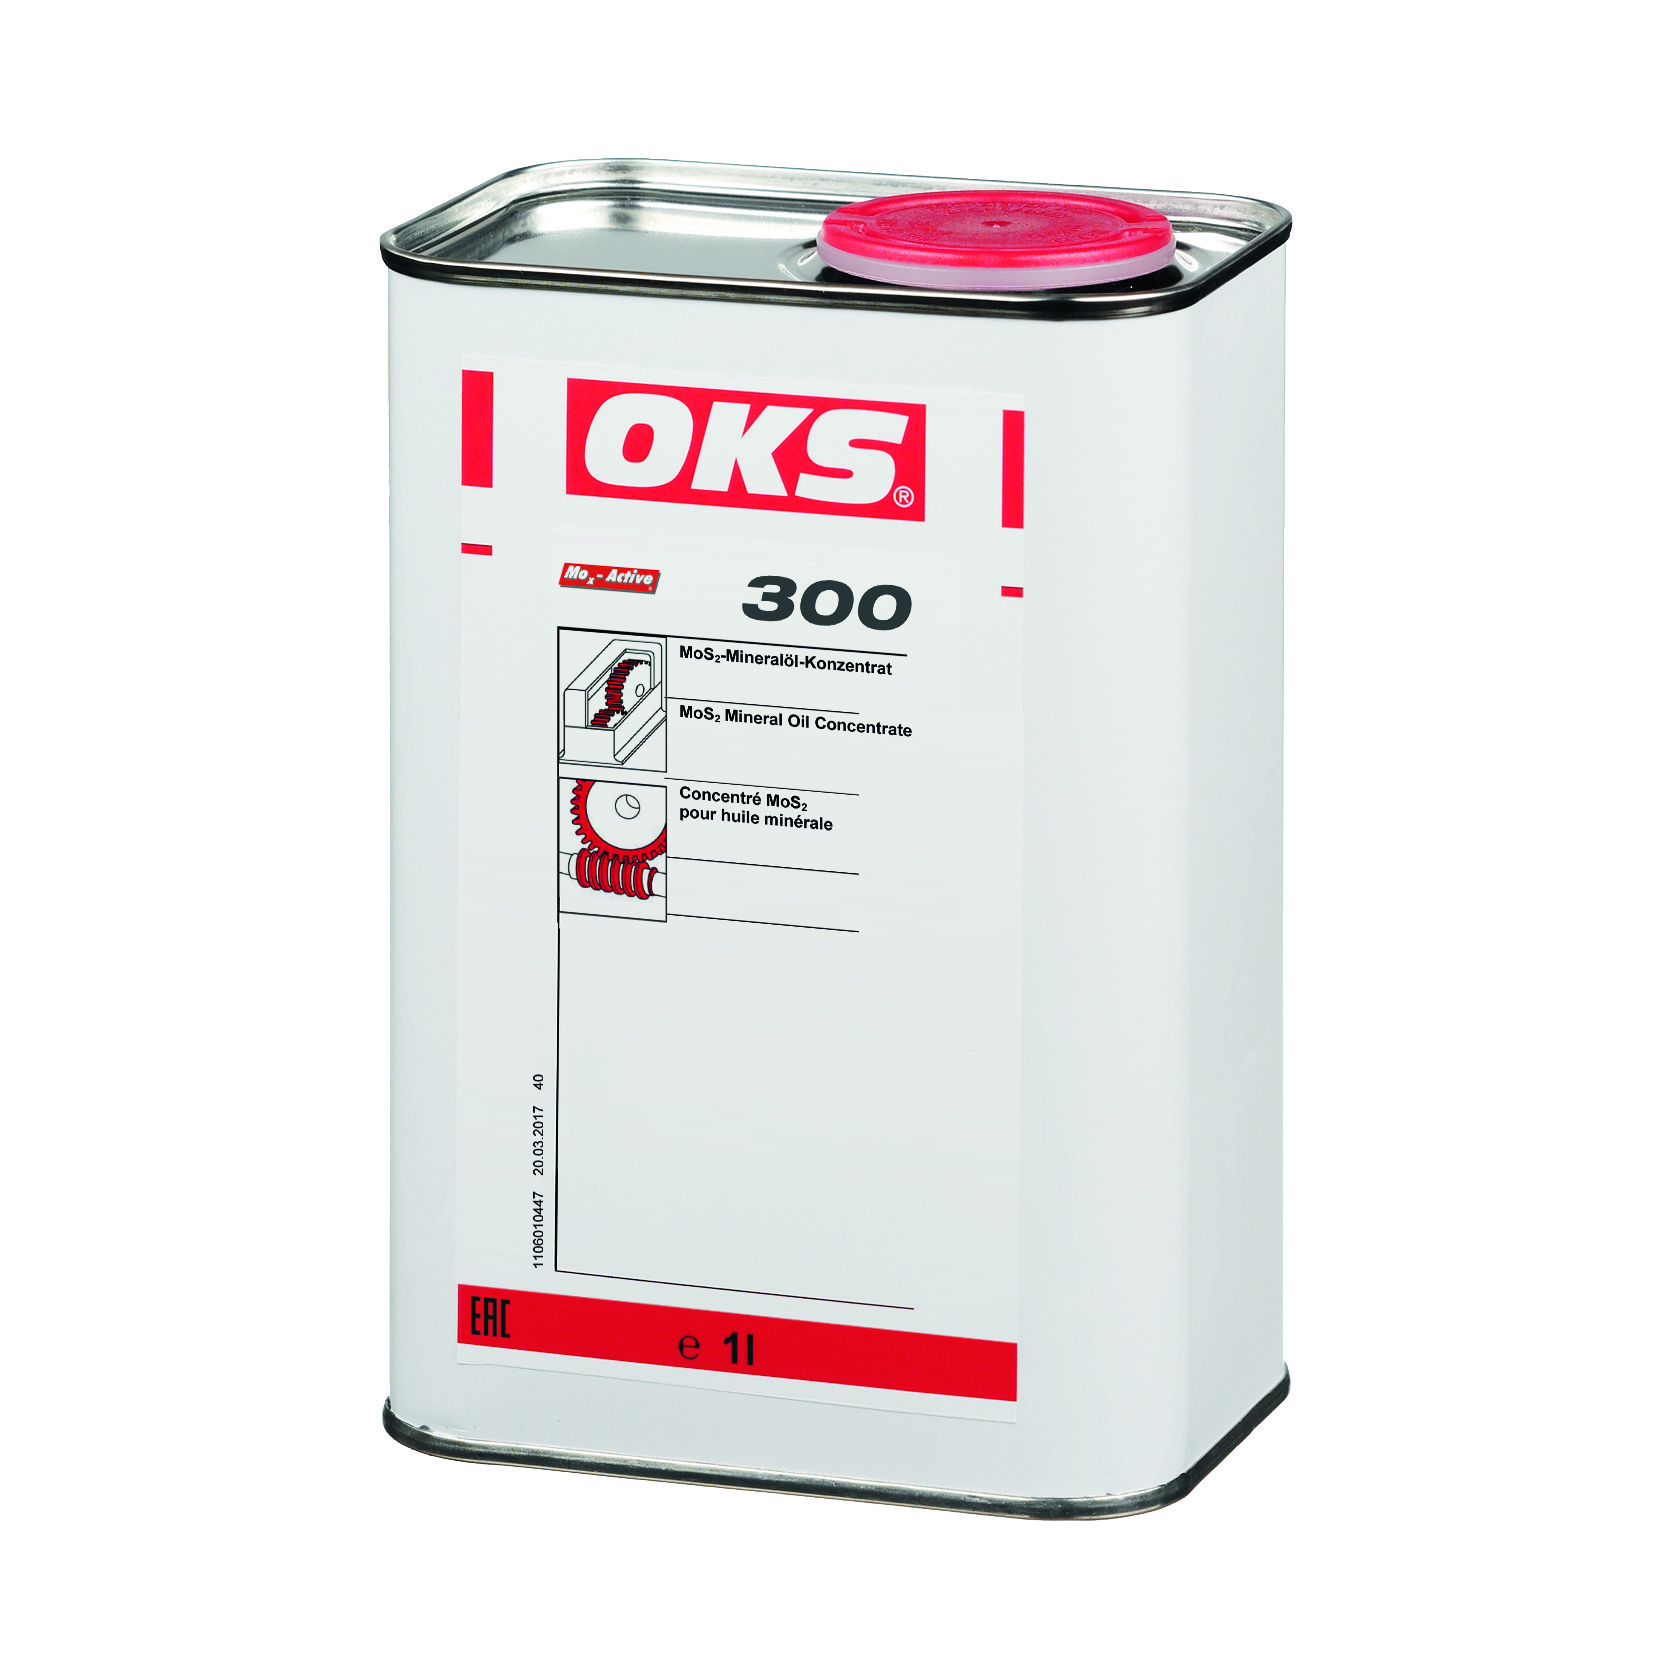 OKS 300 MoS2 mineraalolie geconcentreerd